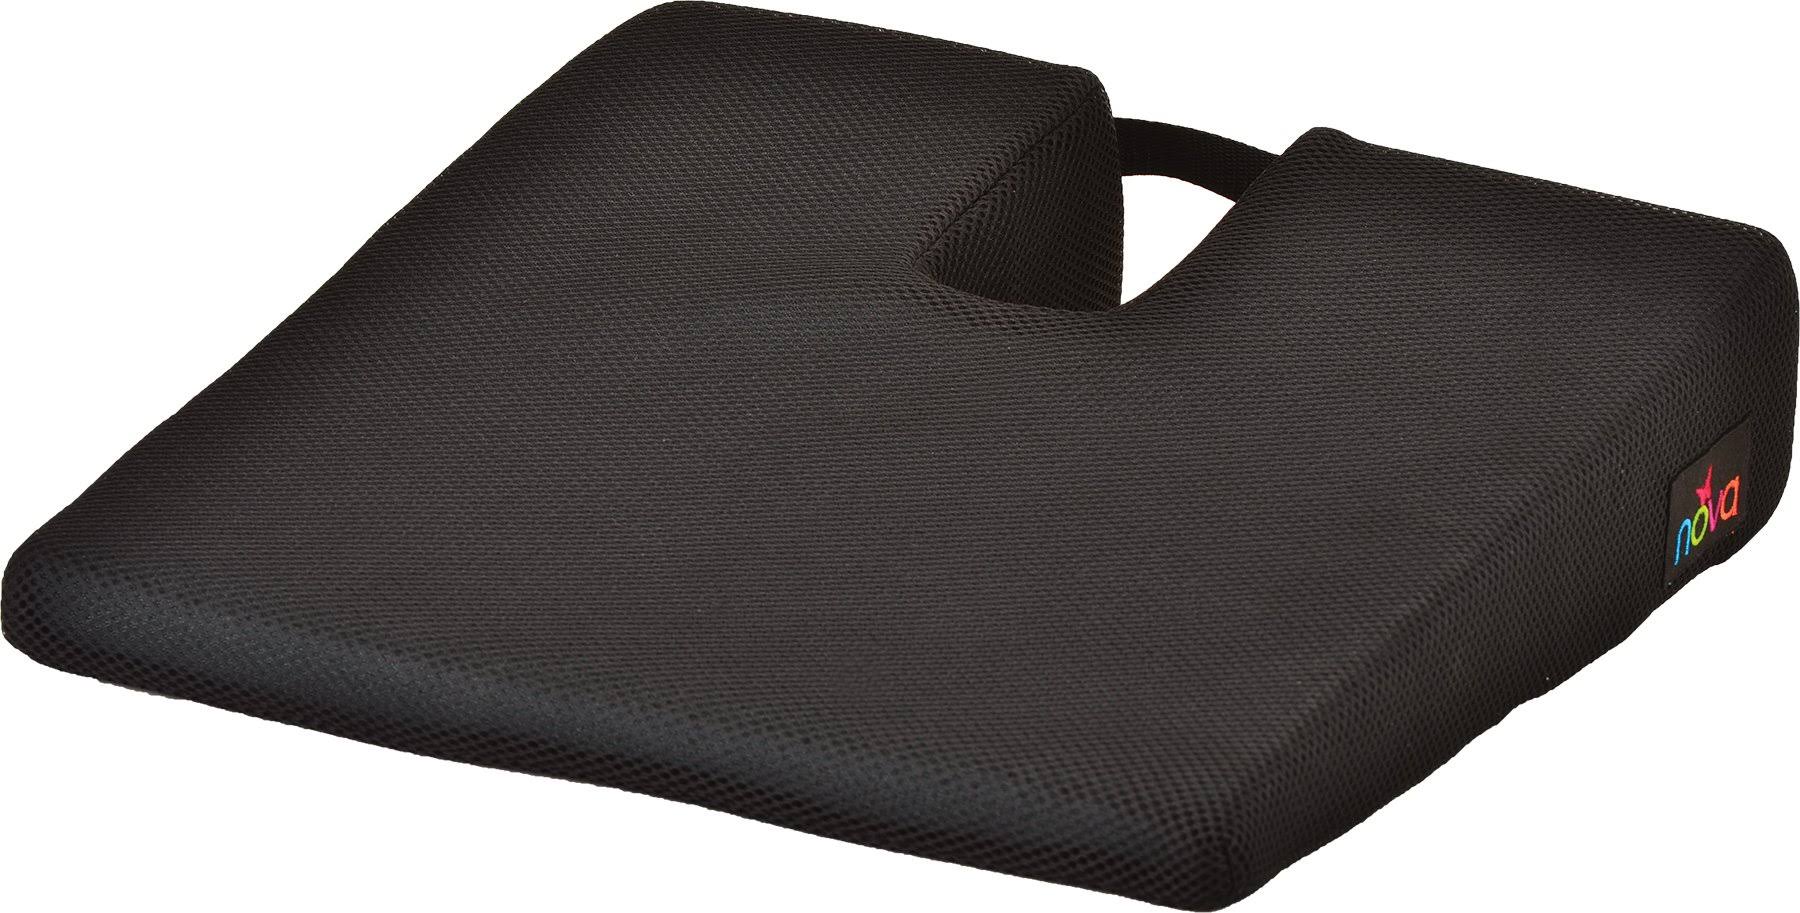 Nova Ortho-med Coccyx Wedge Cushion - Car Cushion, Black, 16.5''